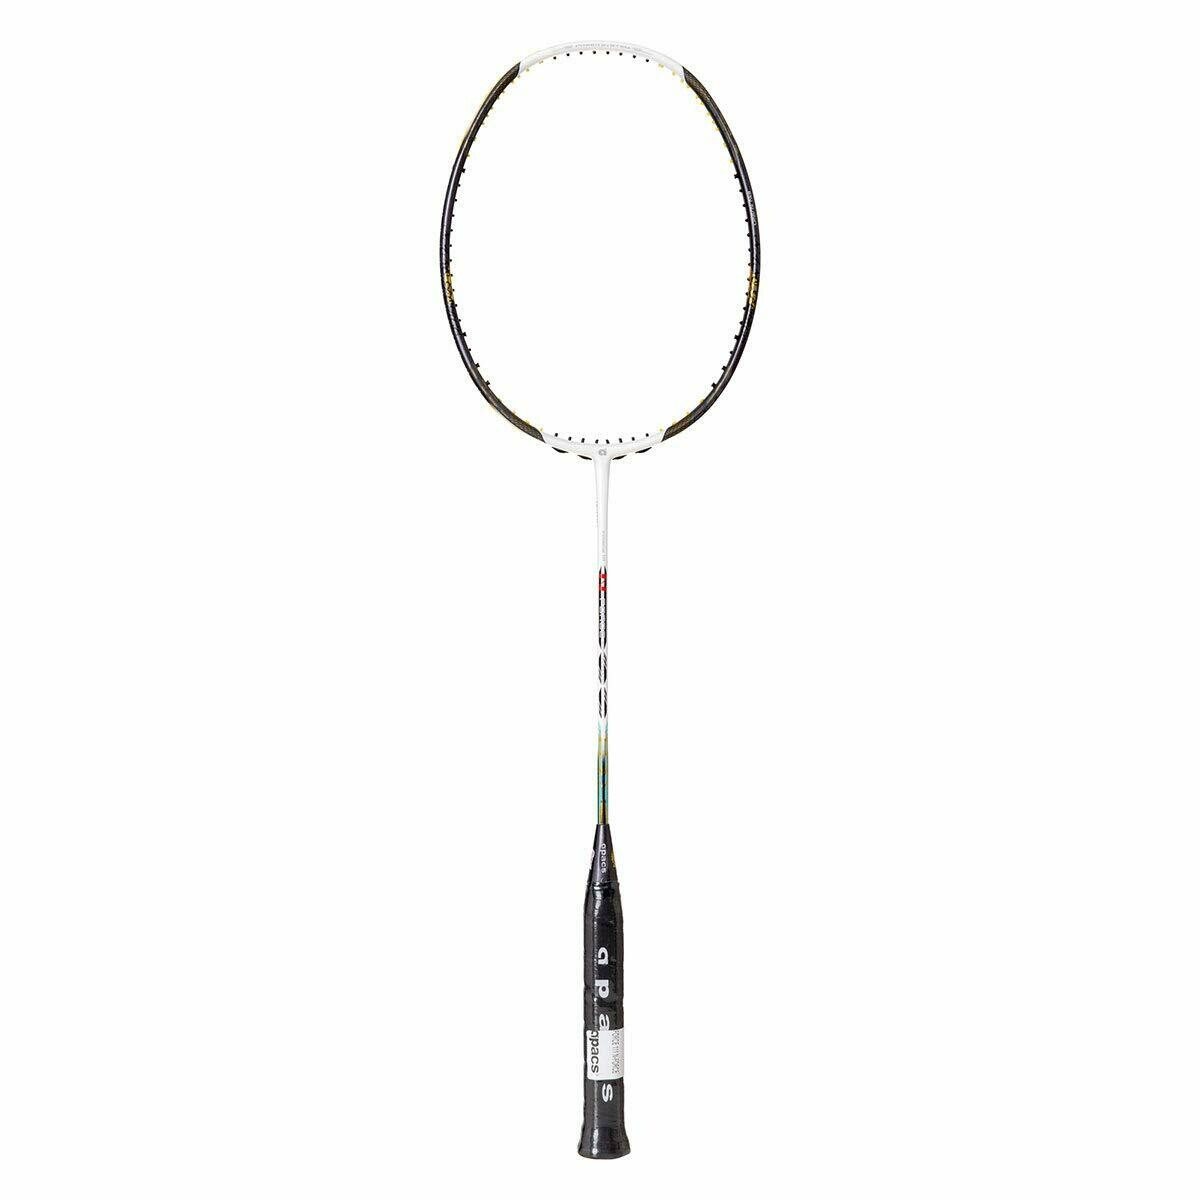 Apacs N Force III White Badminton Racket